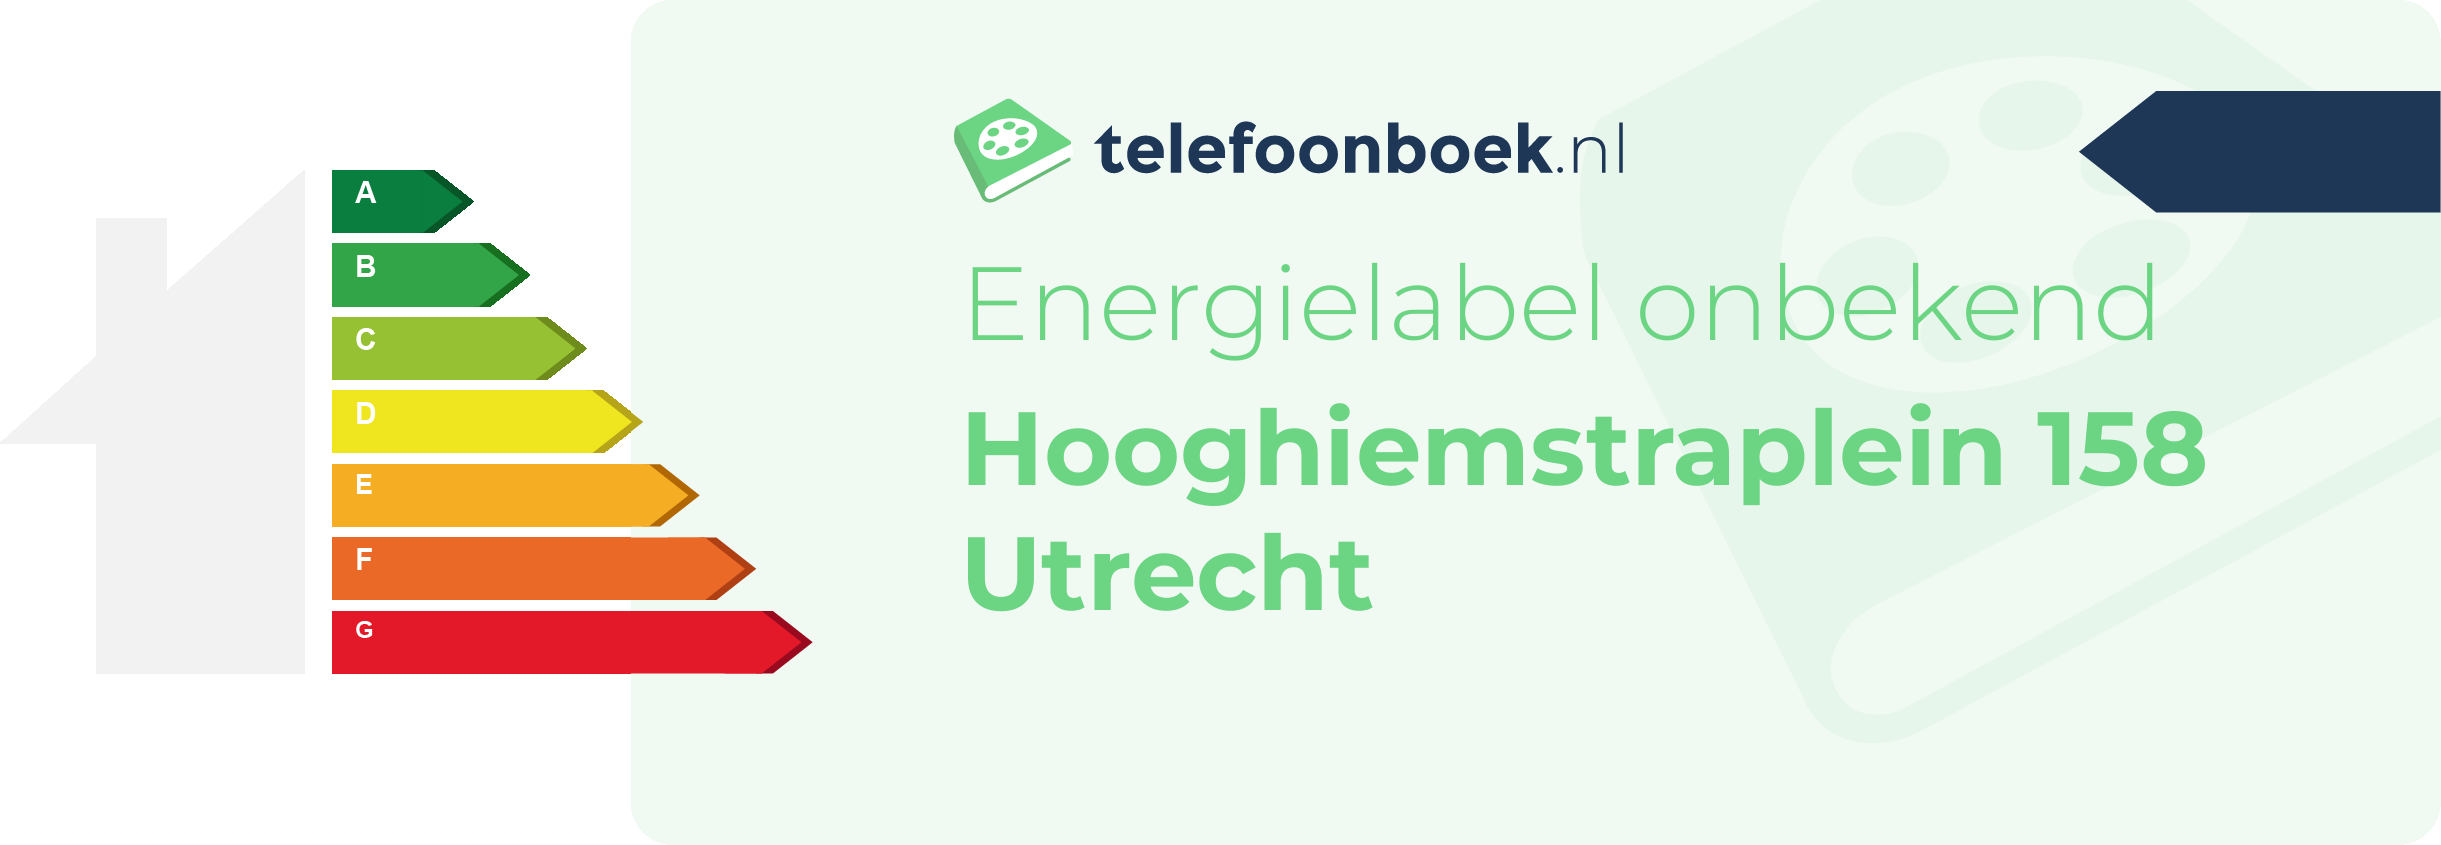 Energielabel Hooghiemstraplein 158 Utrecht